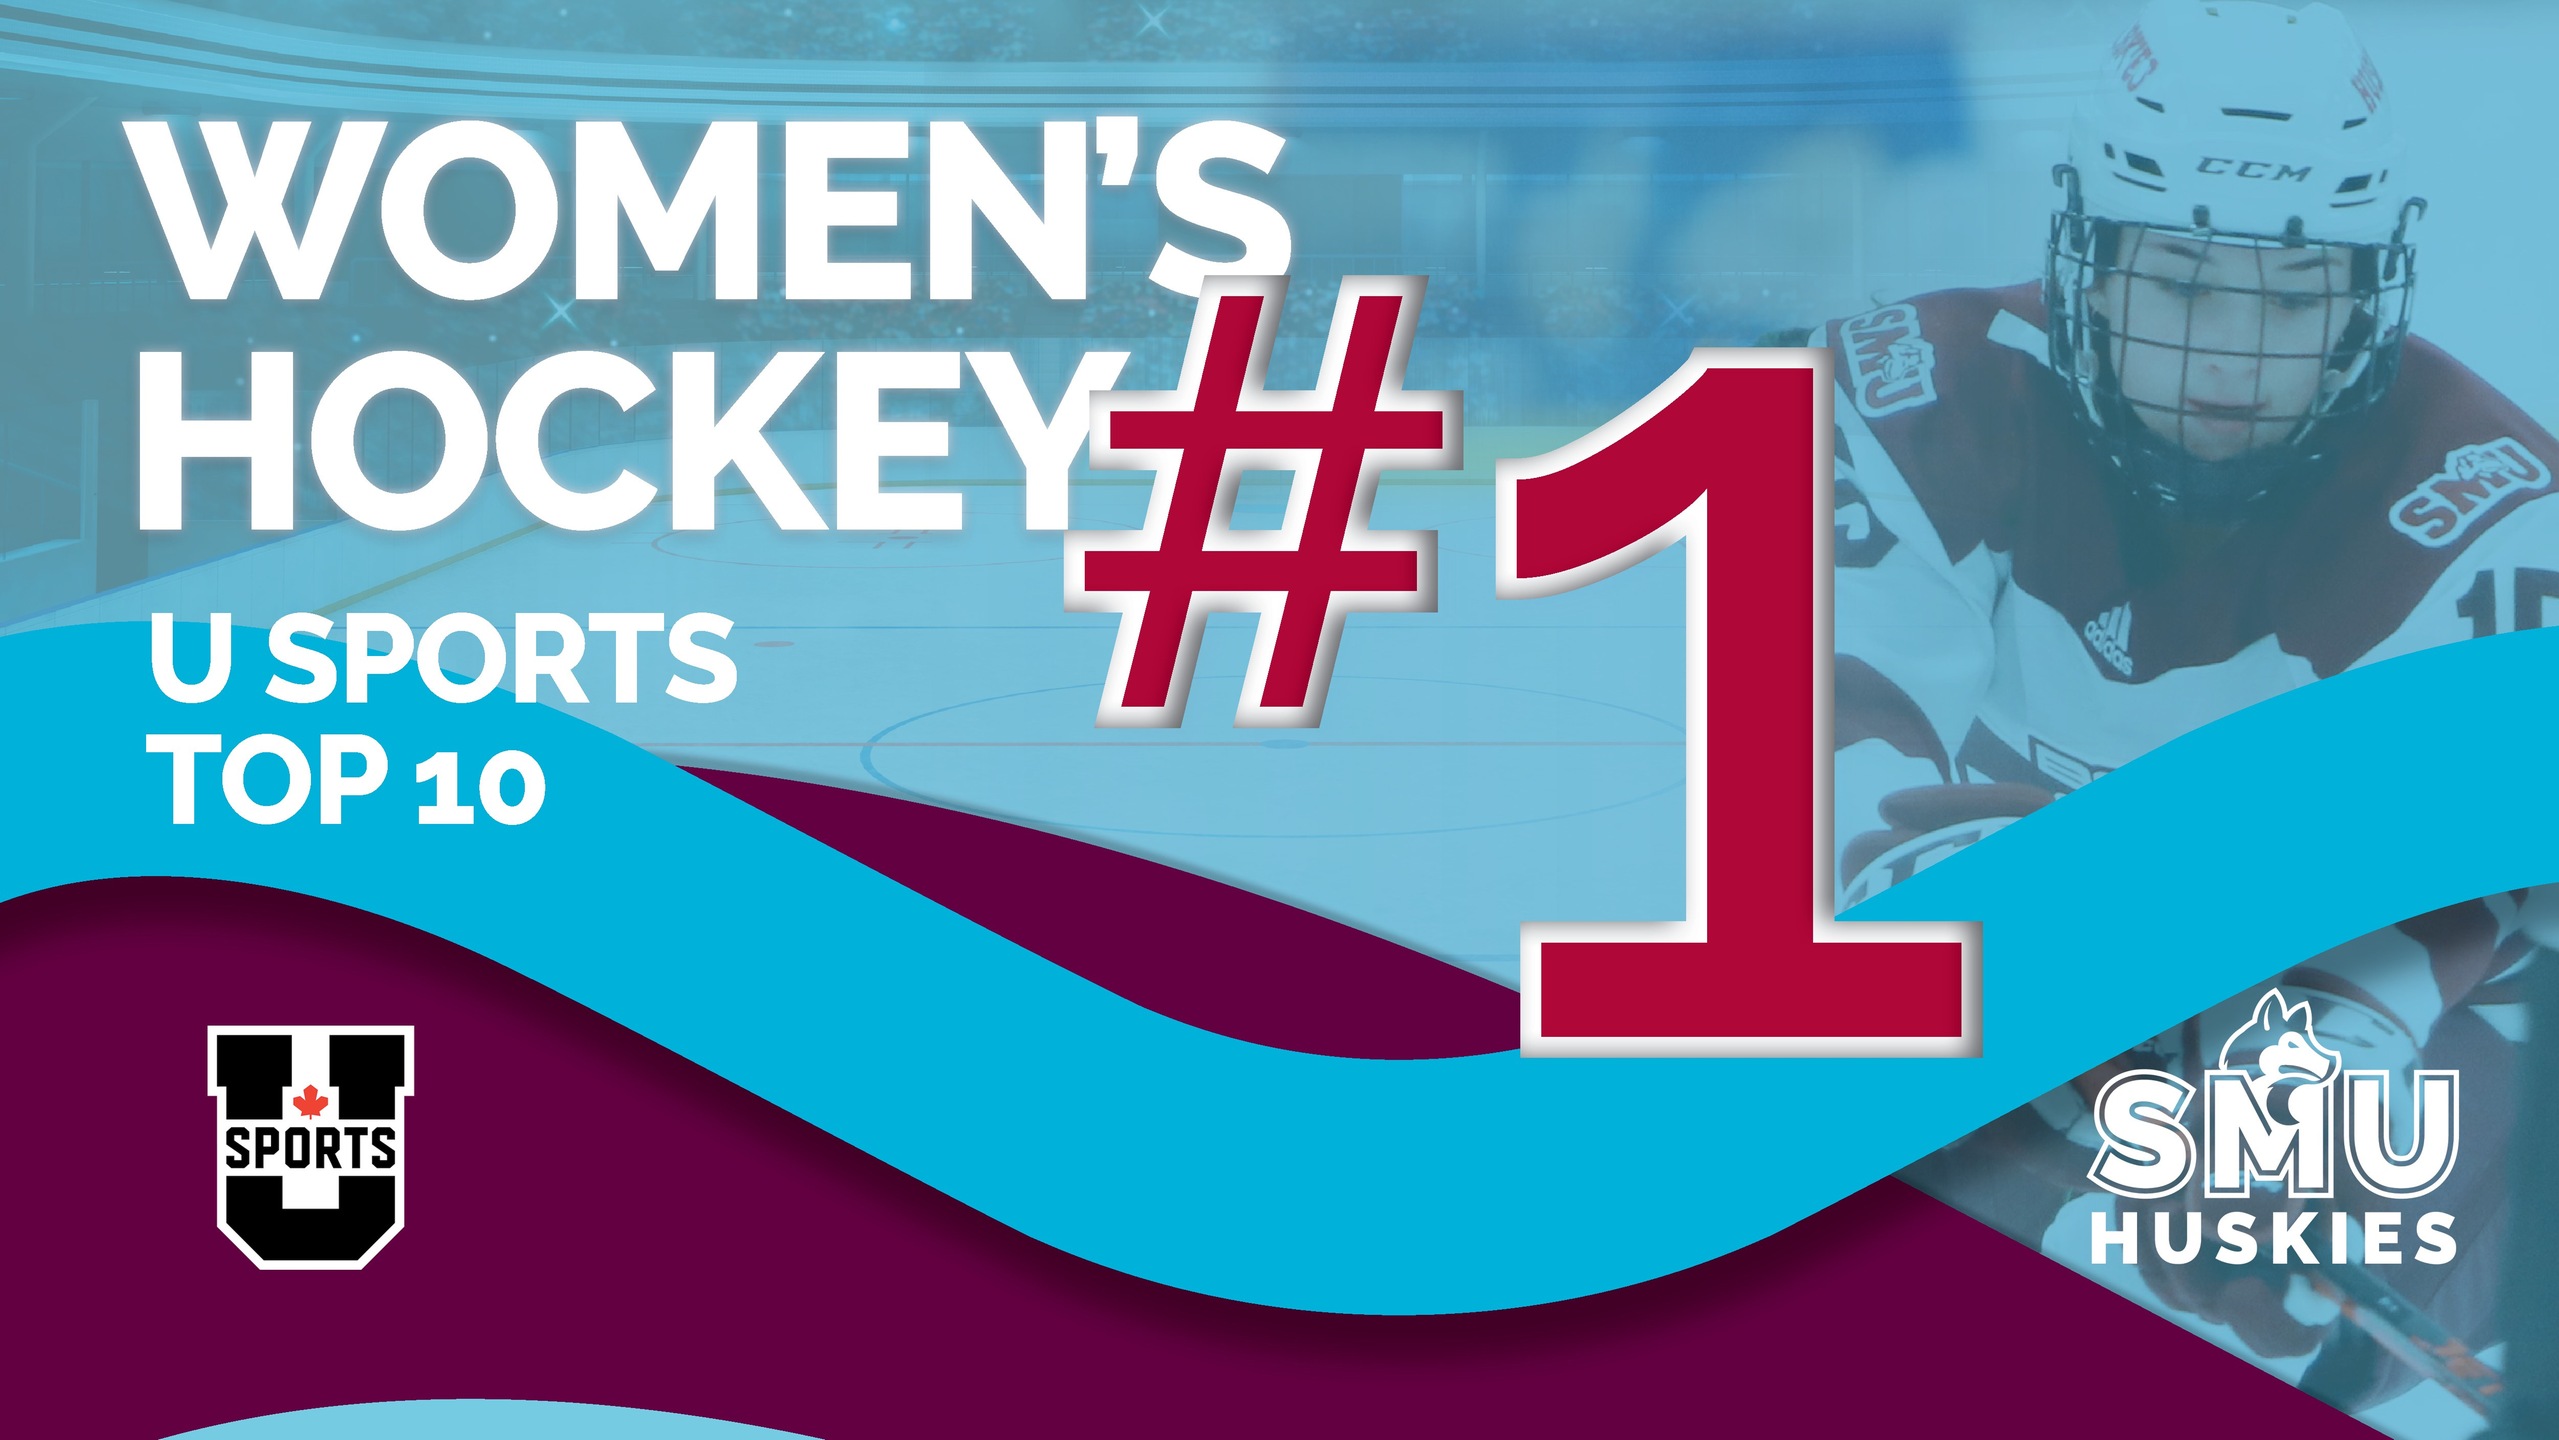 Saint Mary's Huskies women's hockey is ranked #1 in the Nov. 23 U SPORTS Top 10.